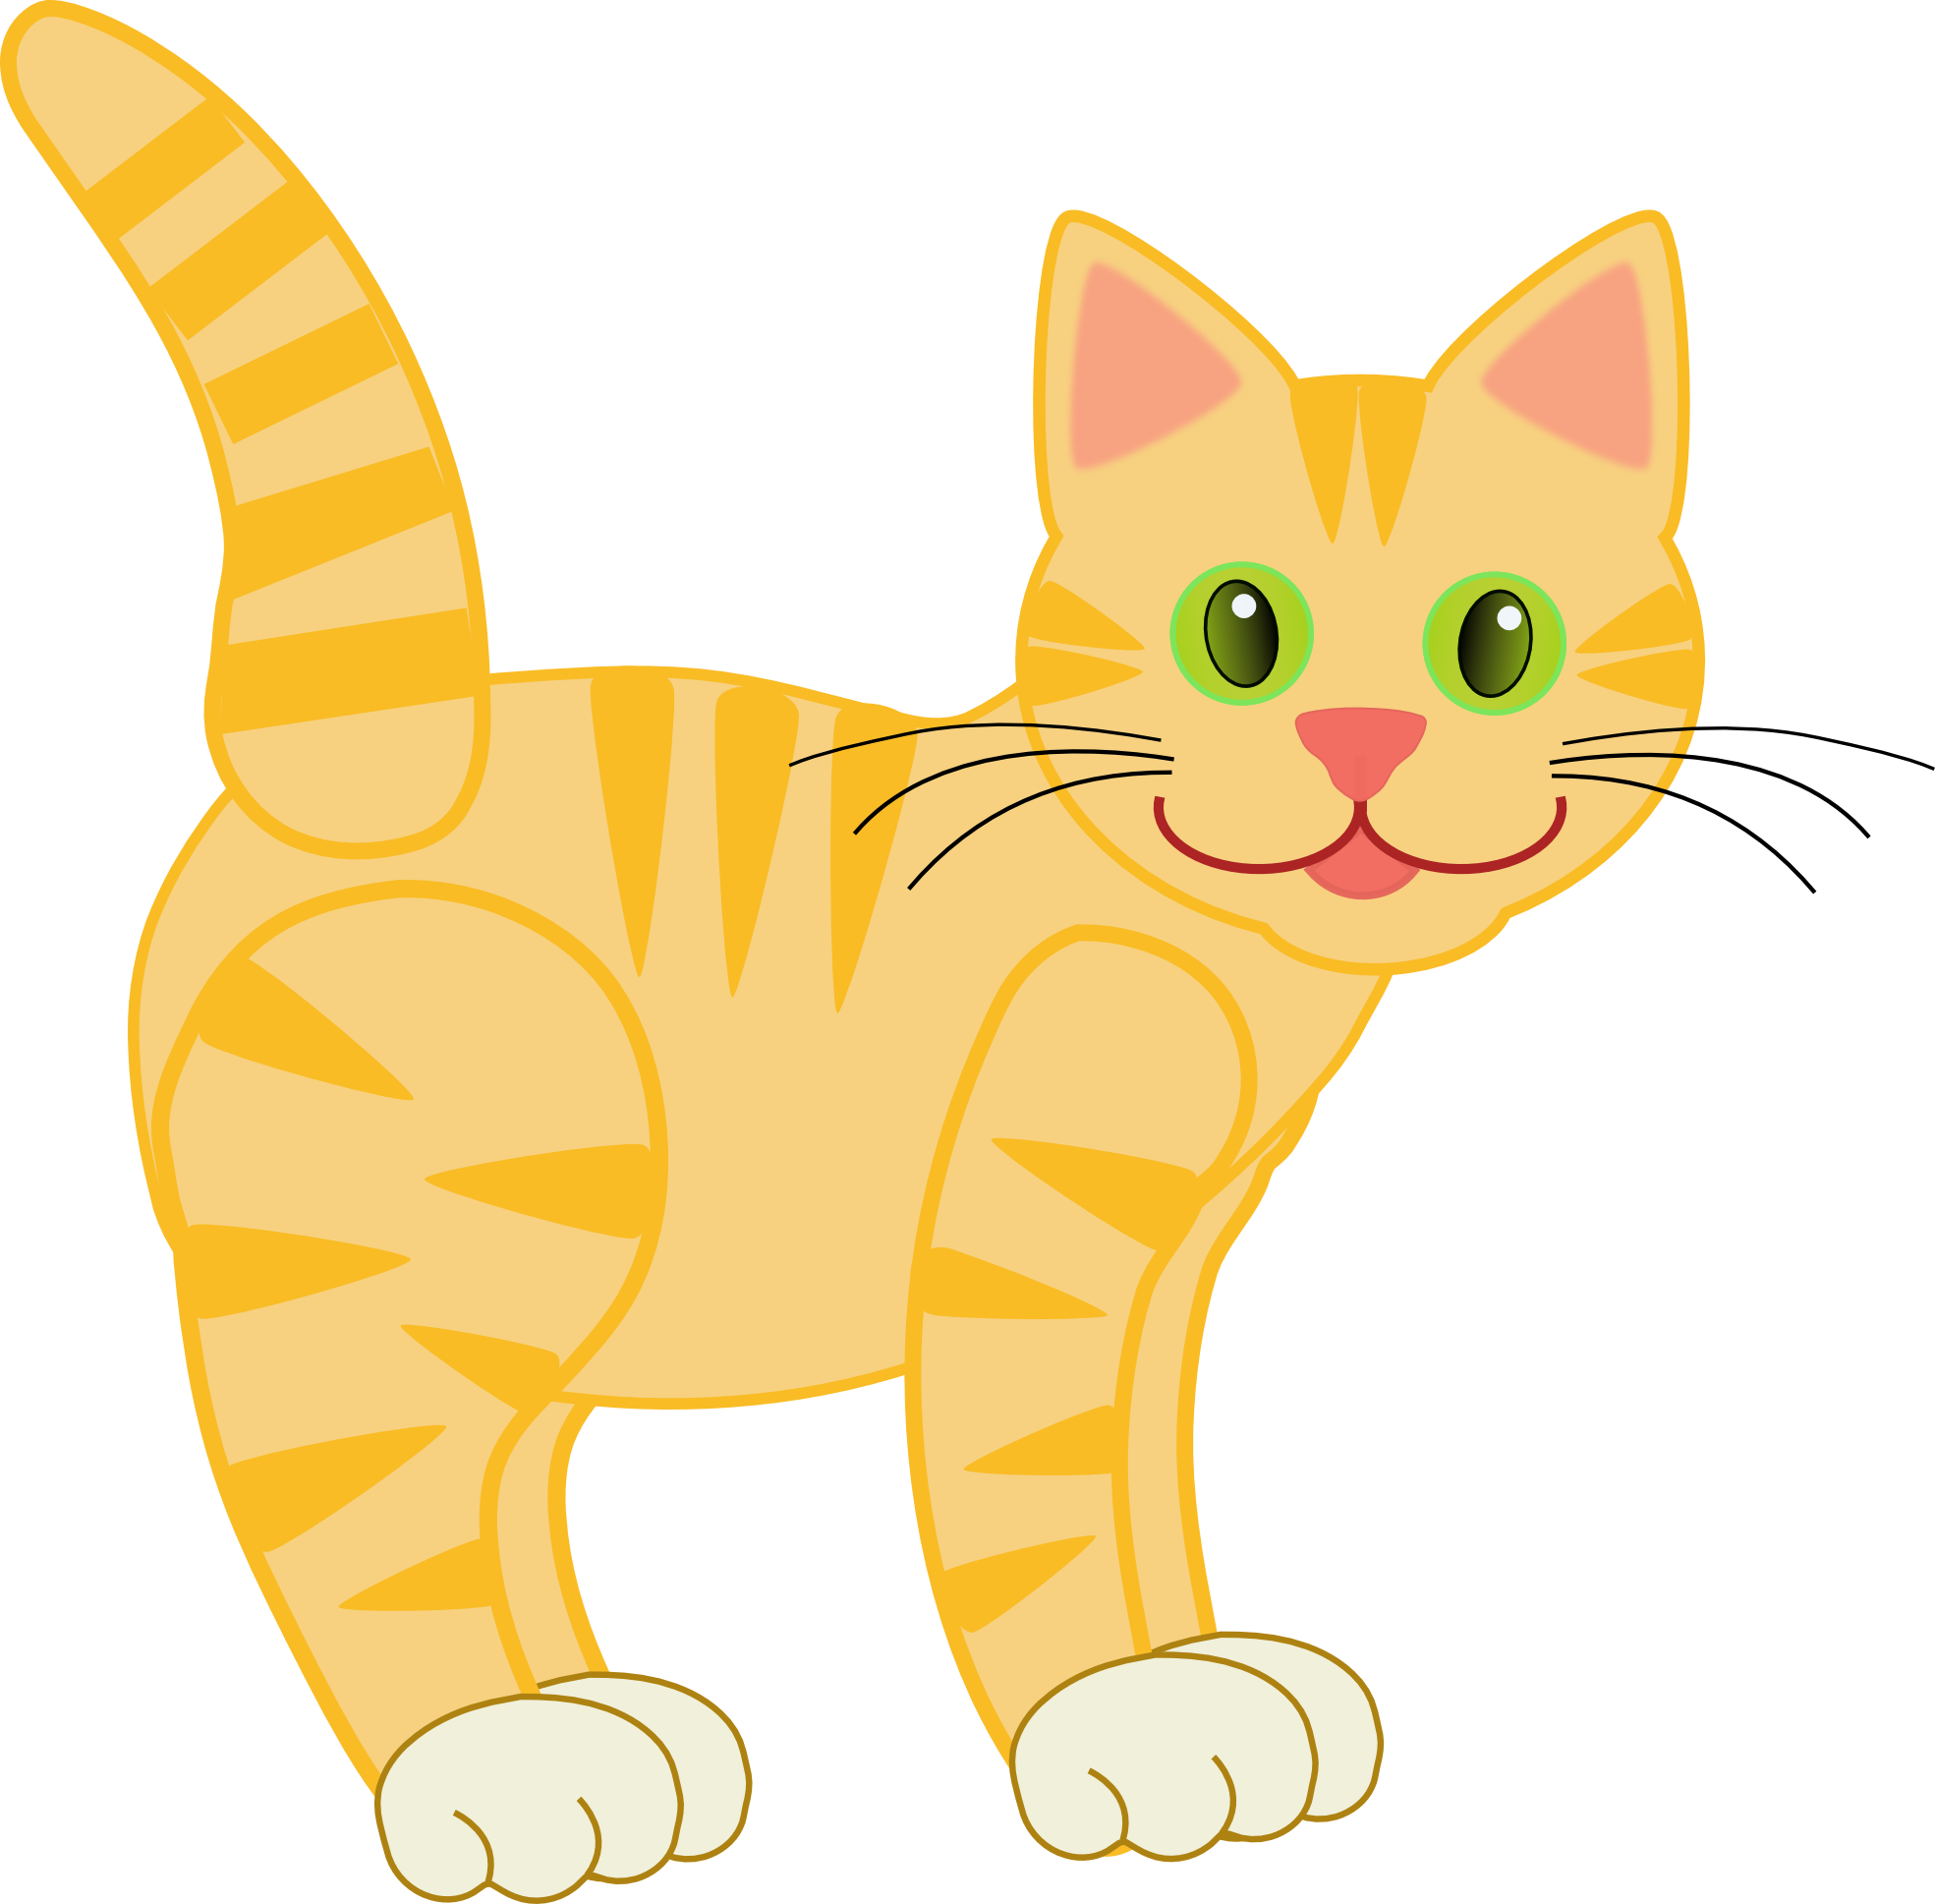 Clip art version2 yellow tiger cat | 15.10.8 | Pinterest | Clip art ...